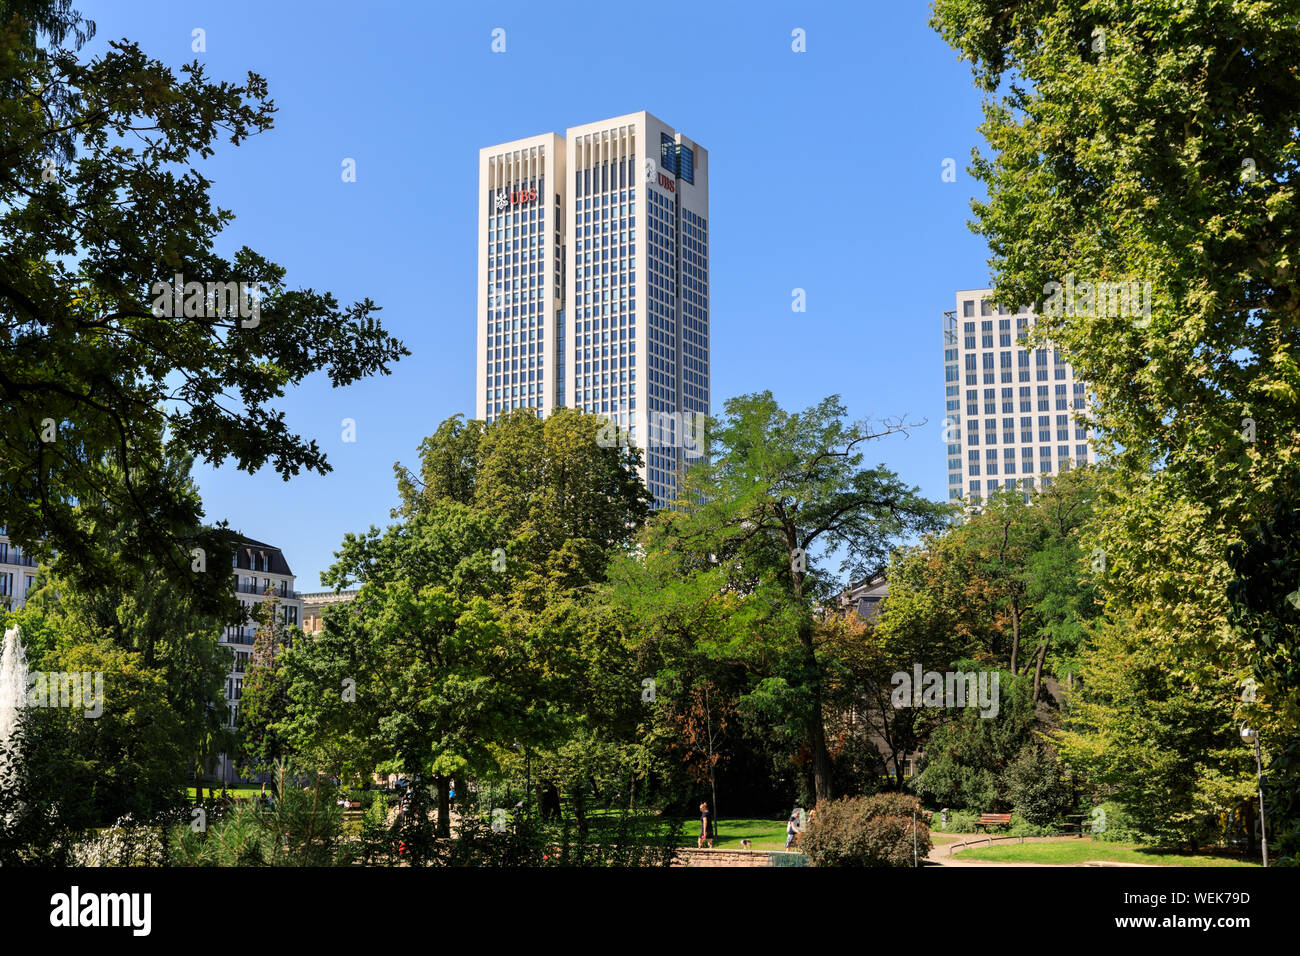 Opera tower, the Opernturm and UBS Swiss Bank European headquarters, exterior high view, Frankfurt, Germany Stock Photo